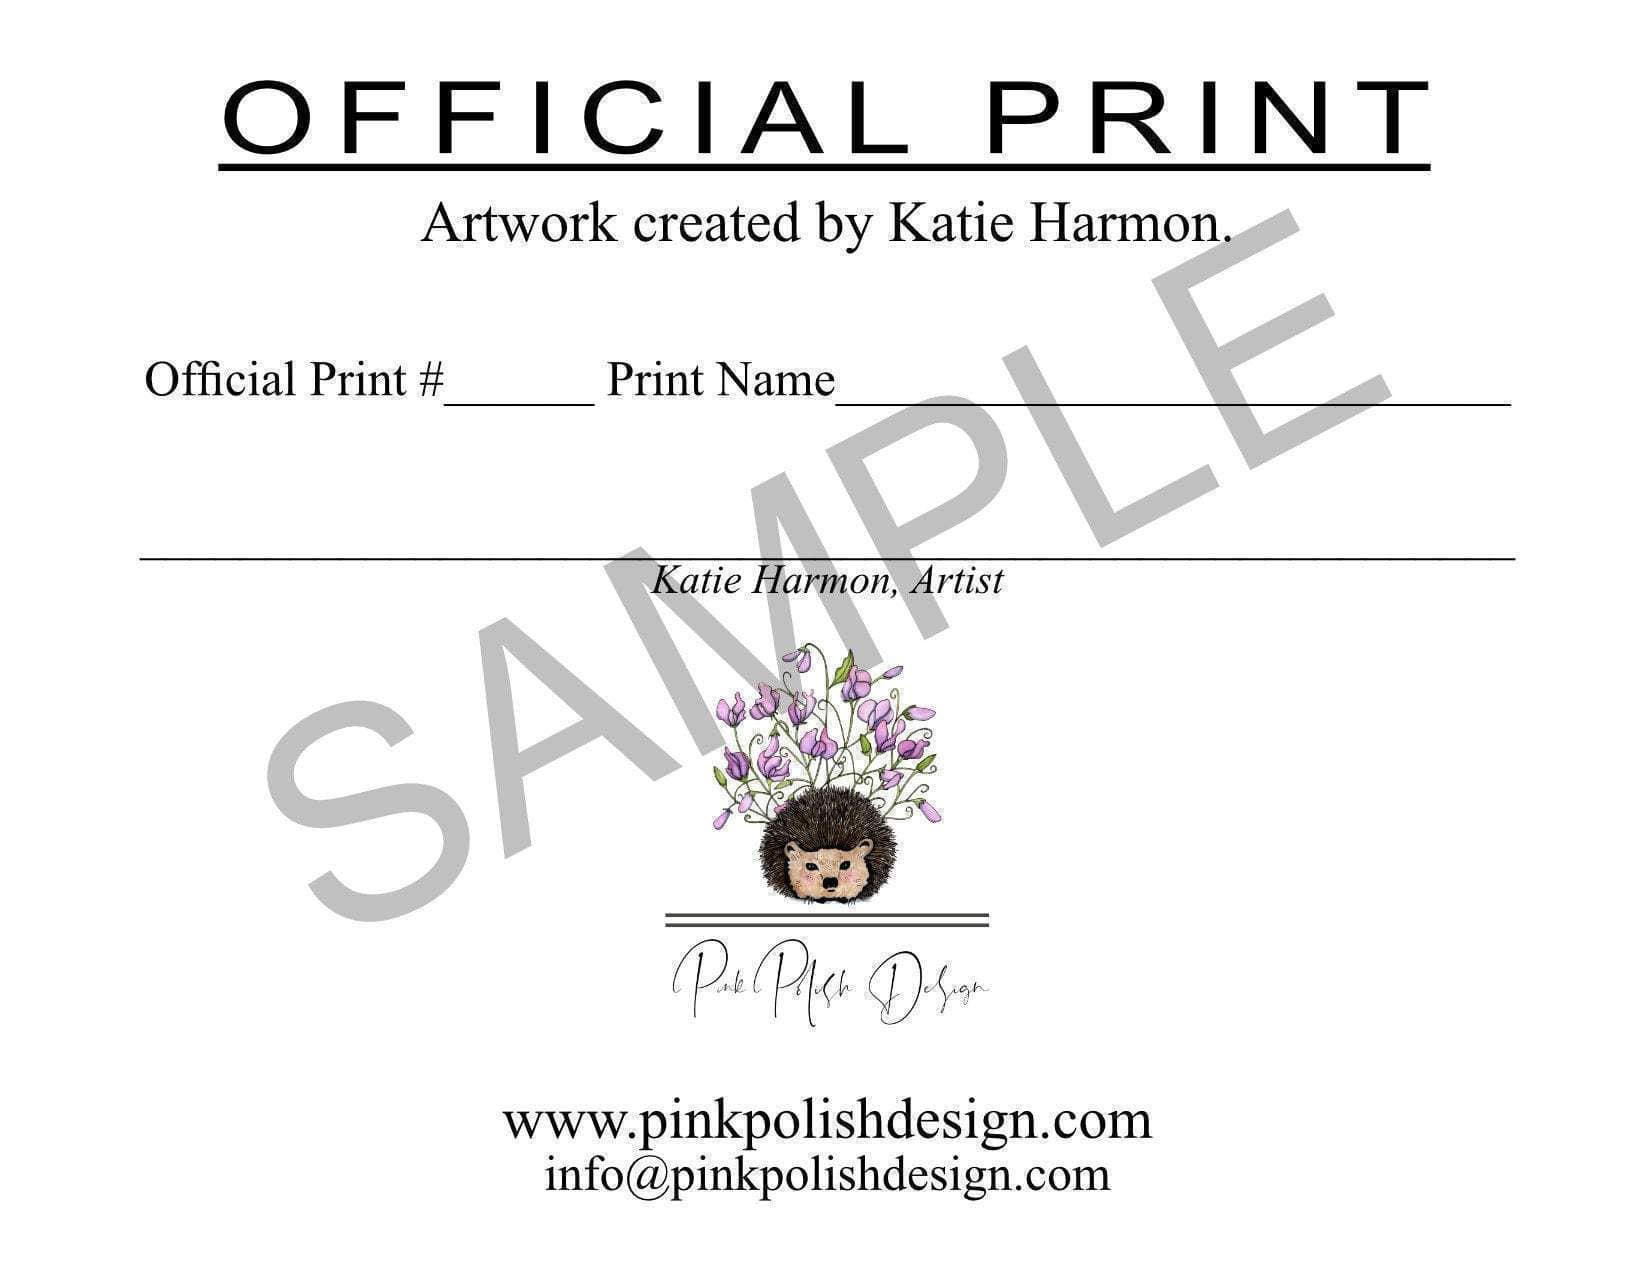 PinkPolish Design Art Prints "Spark" Ink Drawing: Art Print